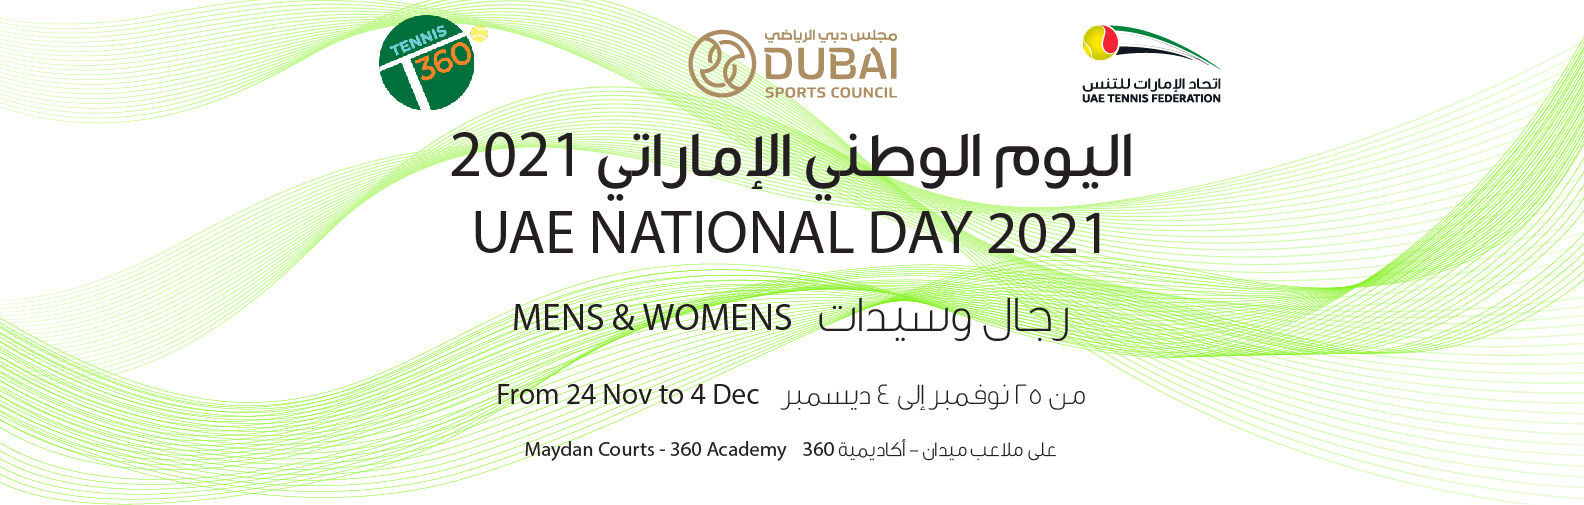 UAE National Day 2021 - Men's Singles 5K